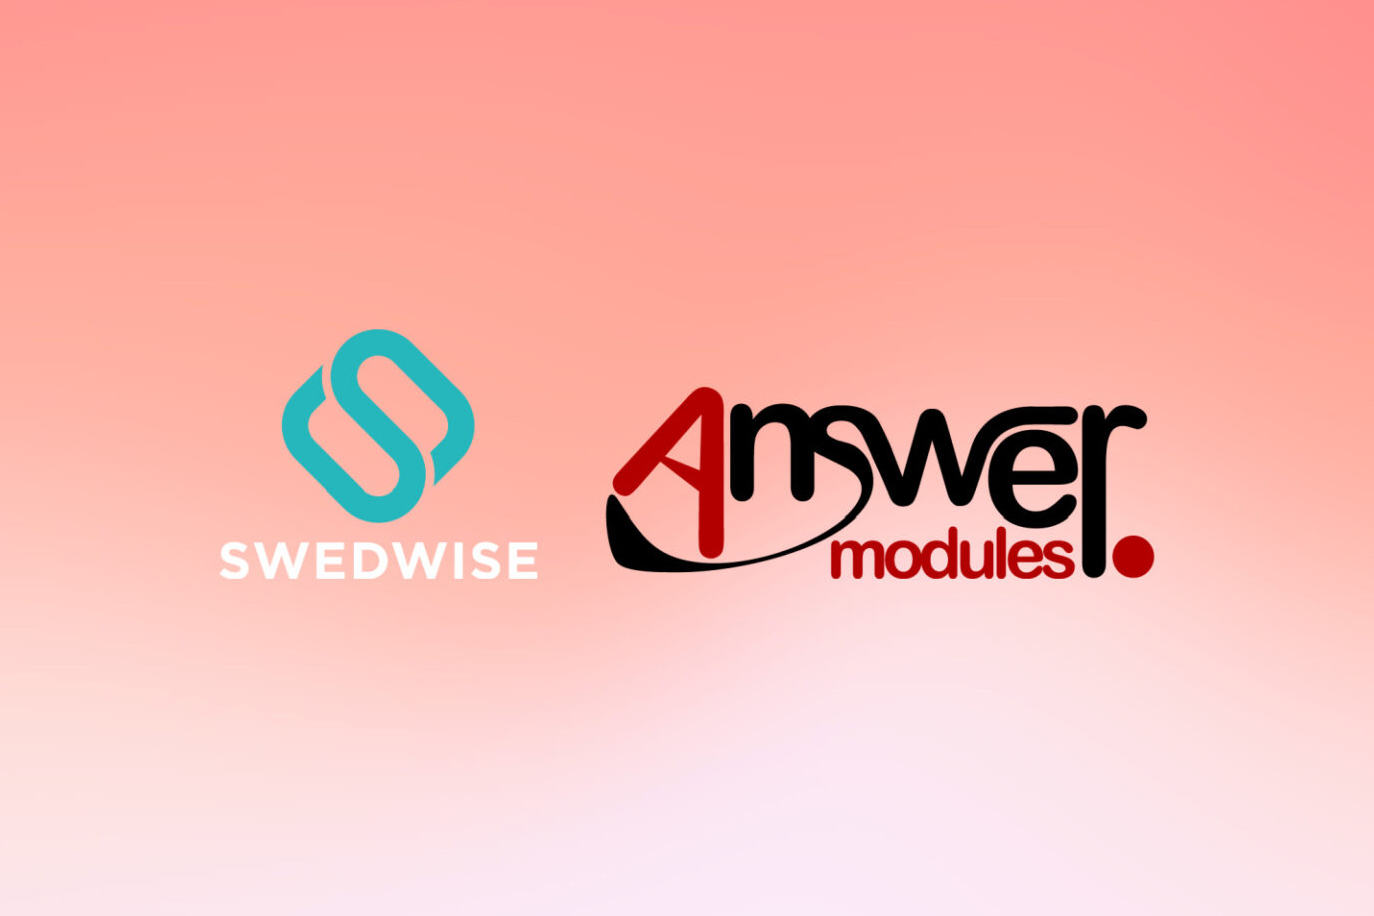 answermodules partnership news